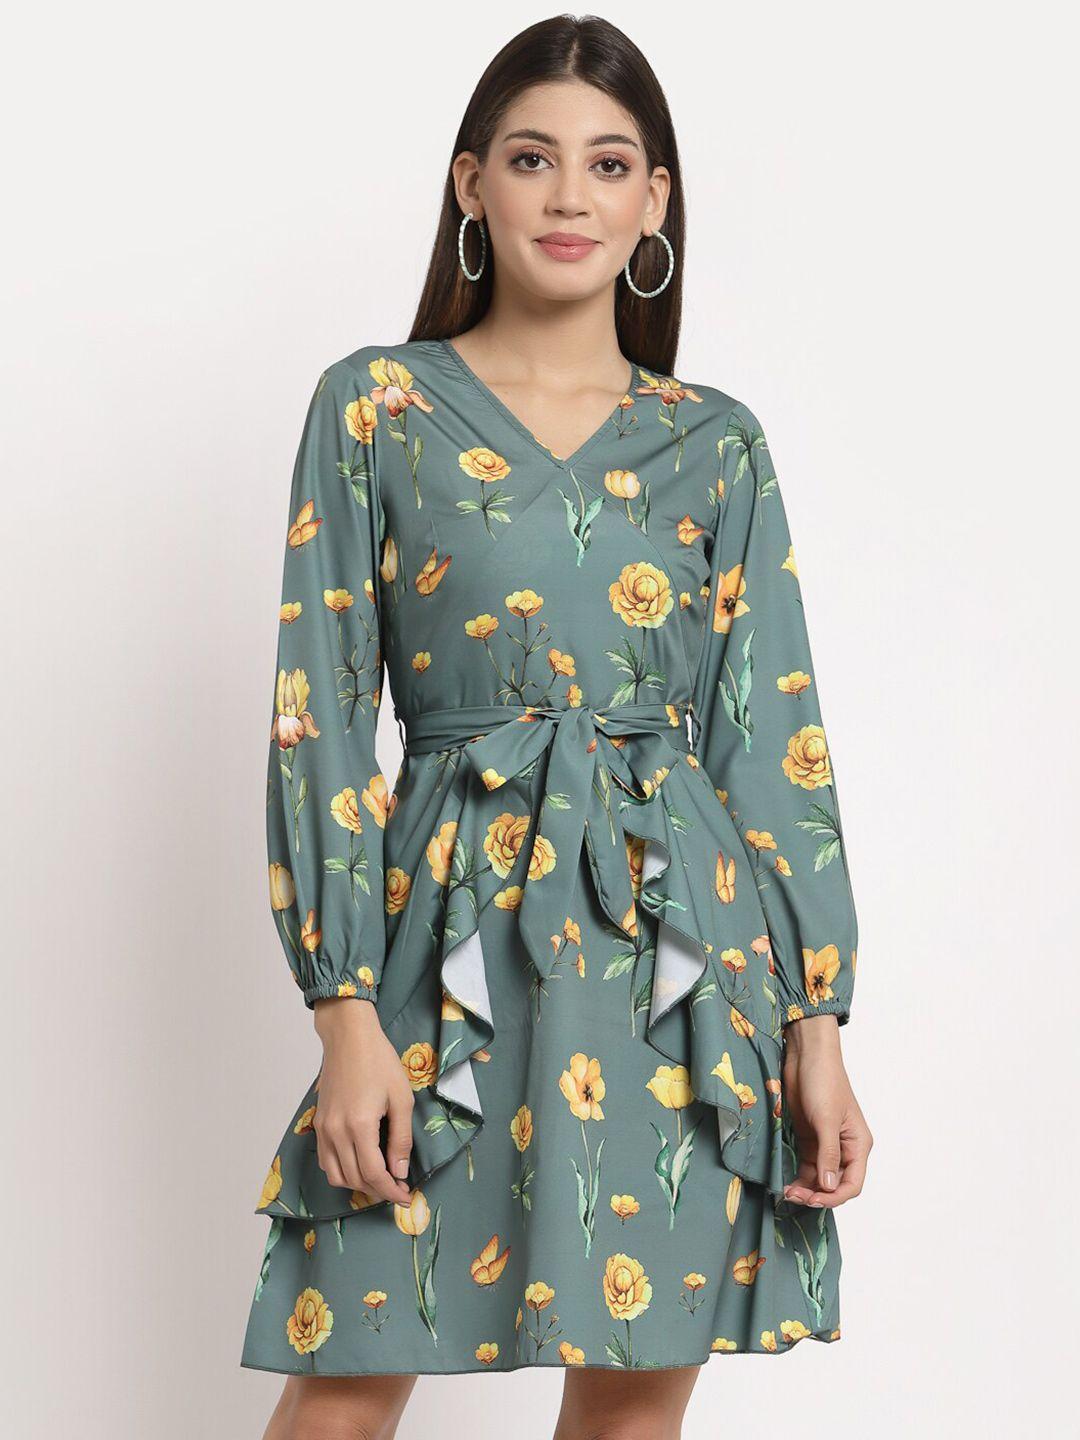 aayu women green & yellow floral crepe dress